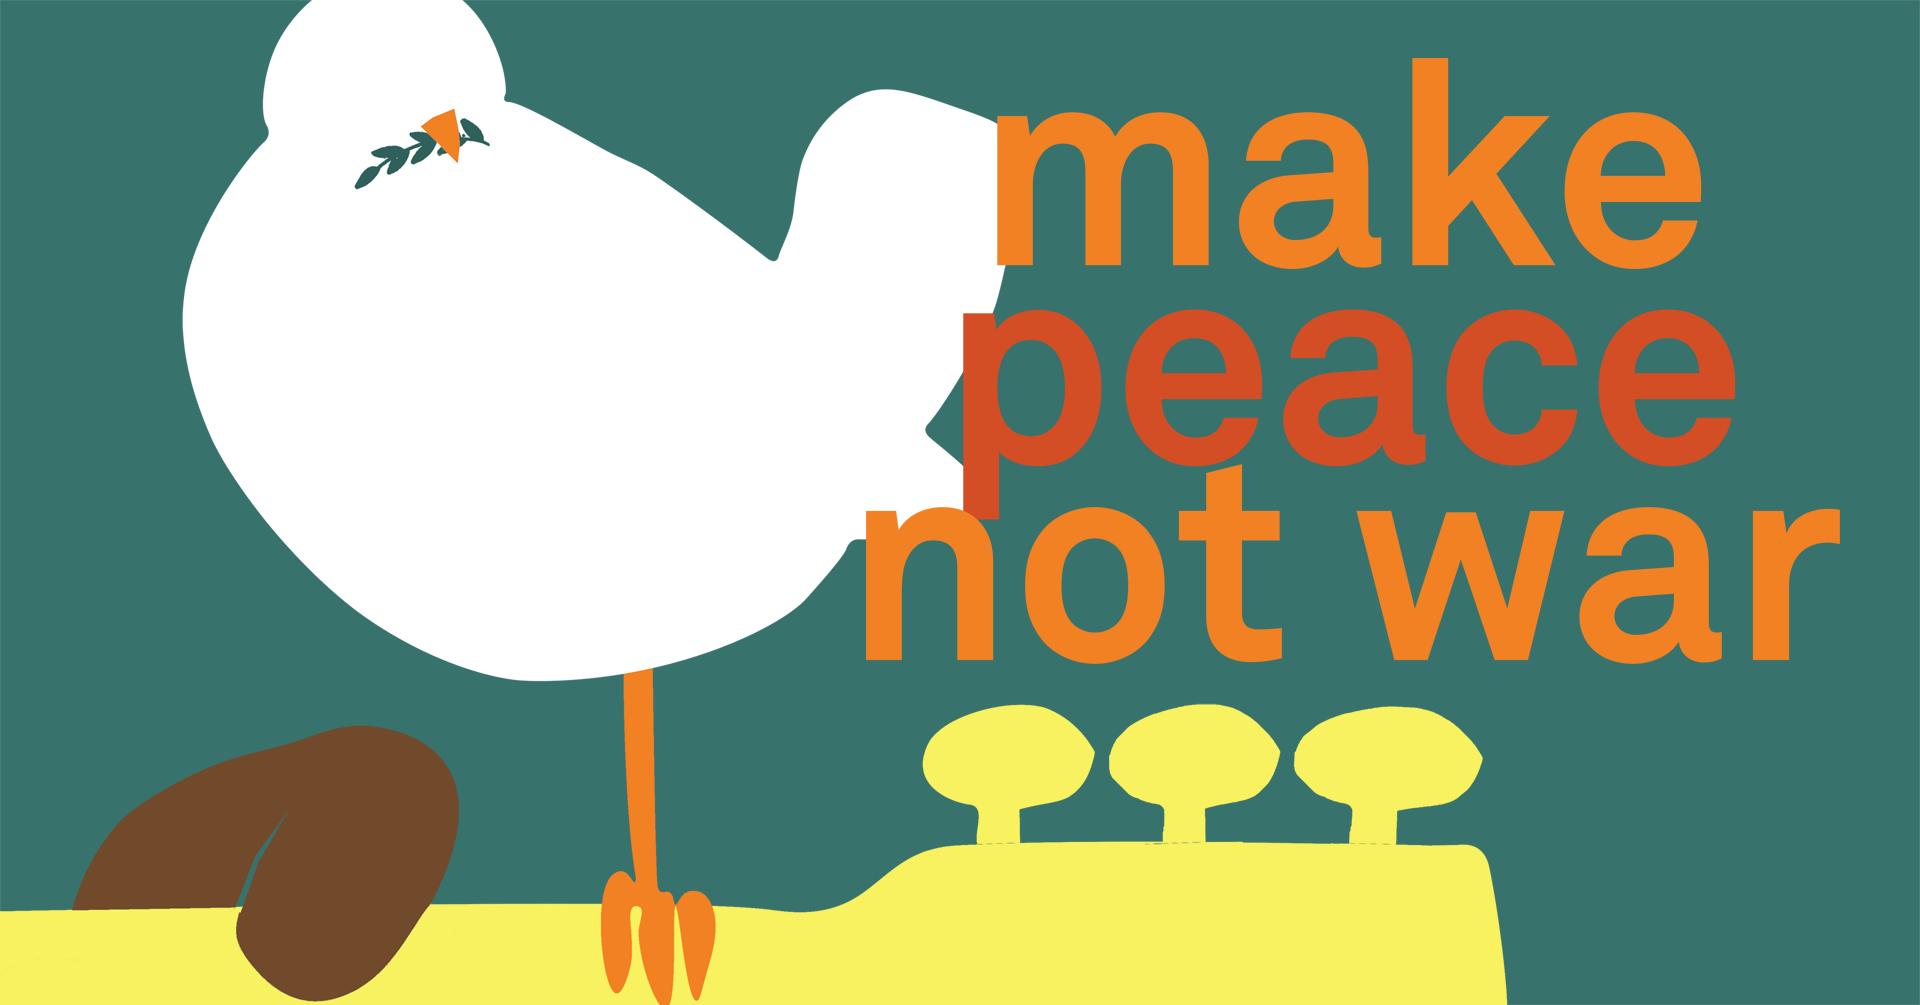 Make peace, not war in Wetteren